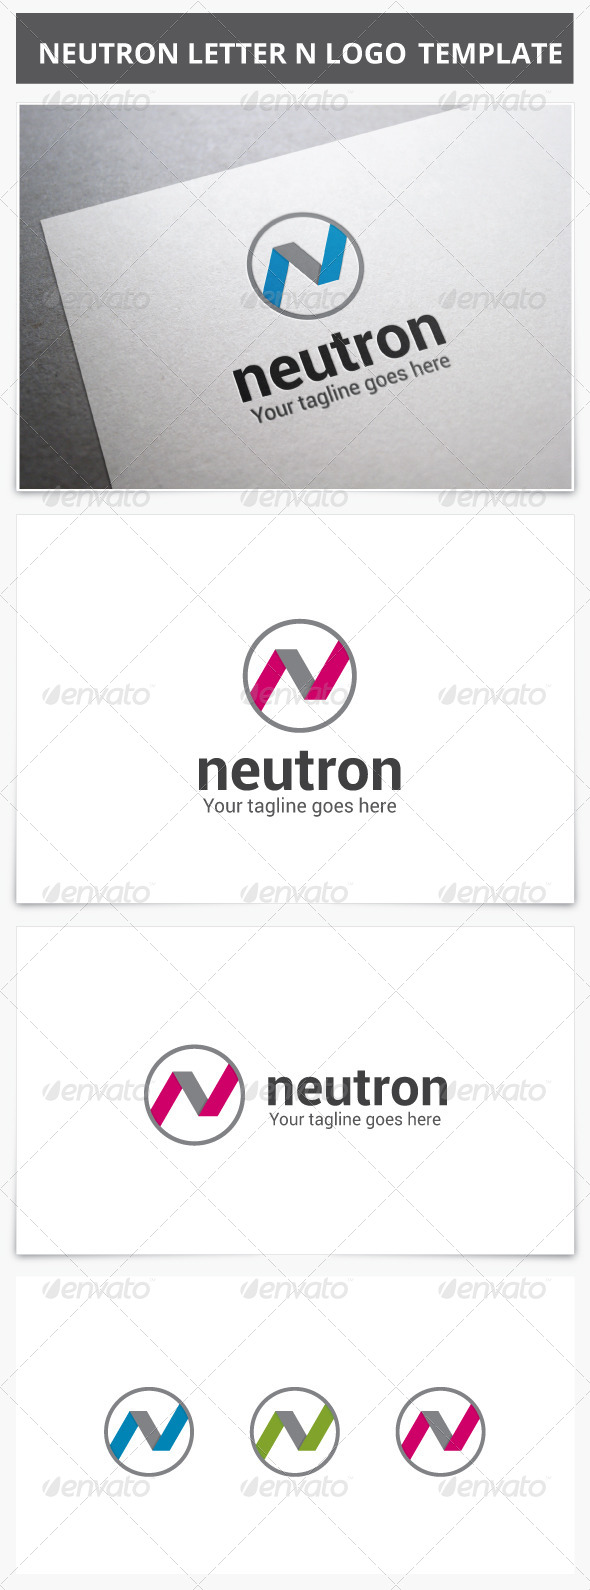 GraphicRiver Neutron Letter N Logo 7720609